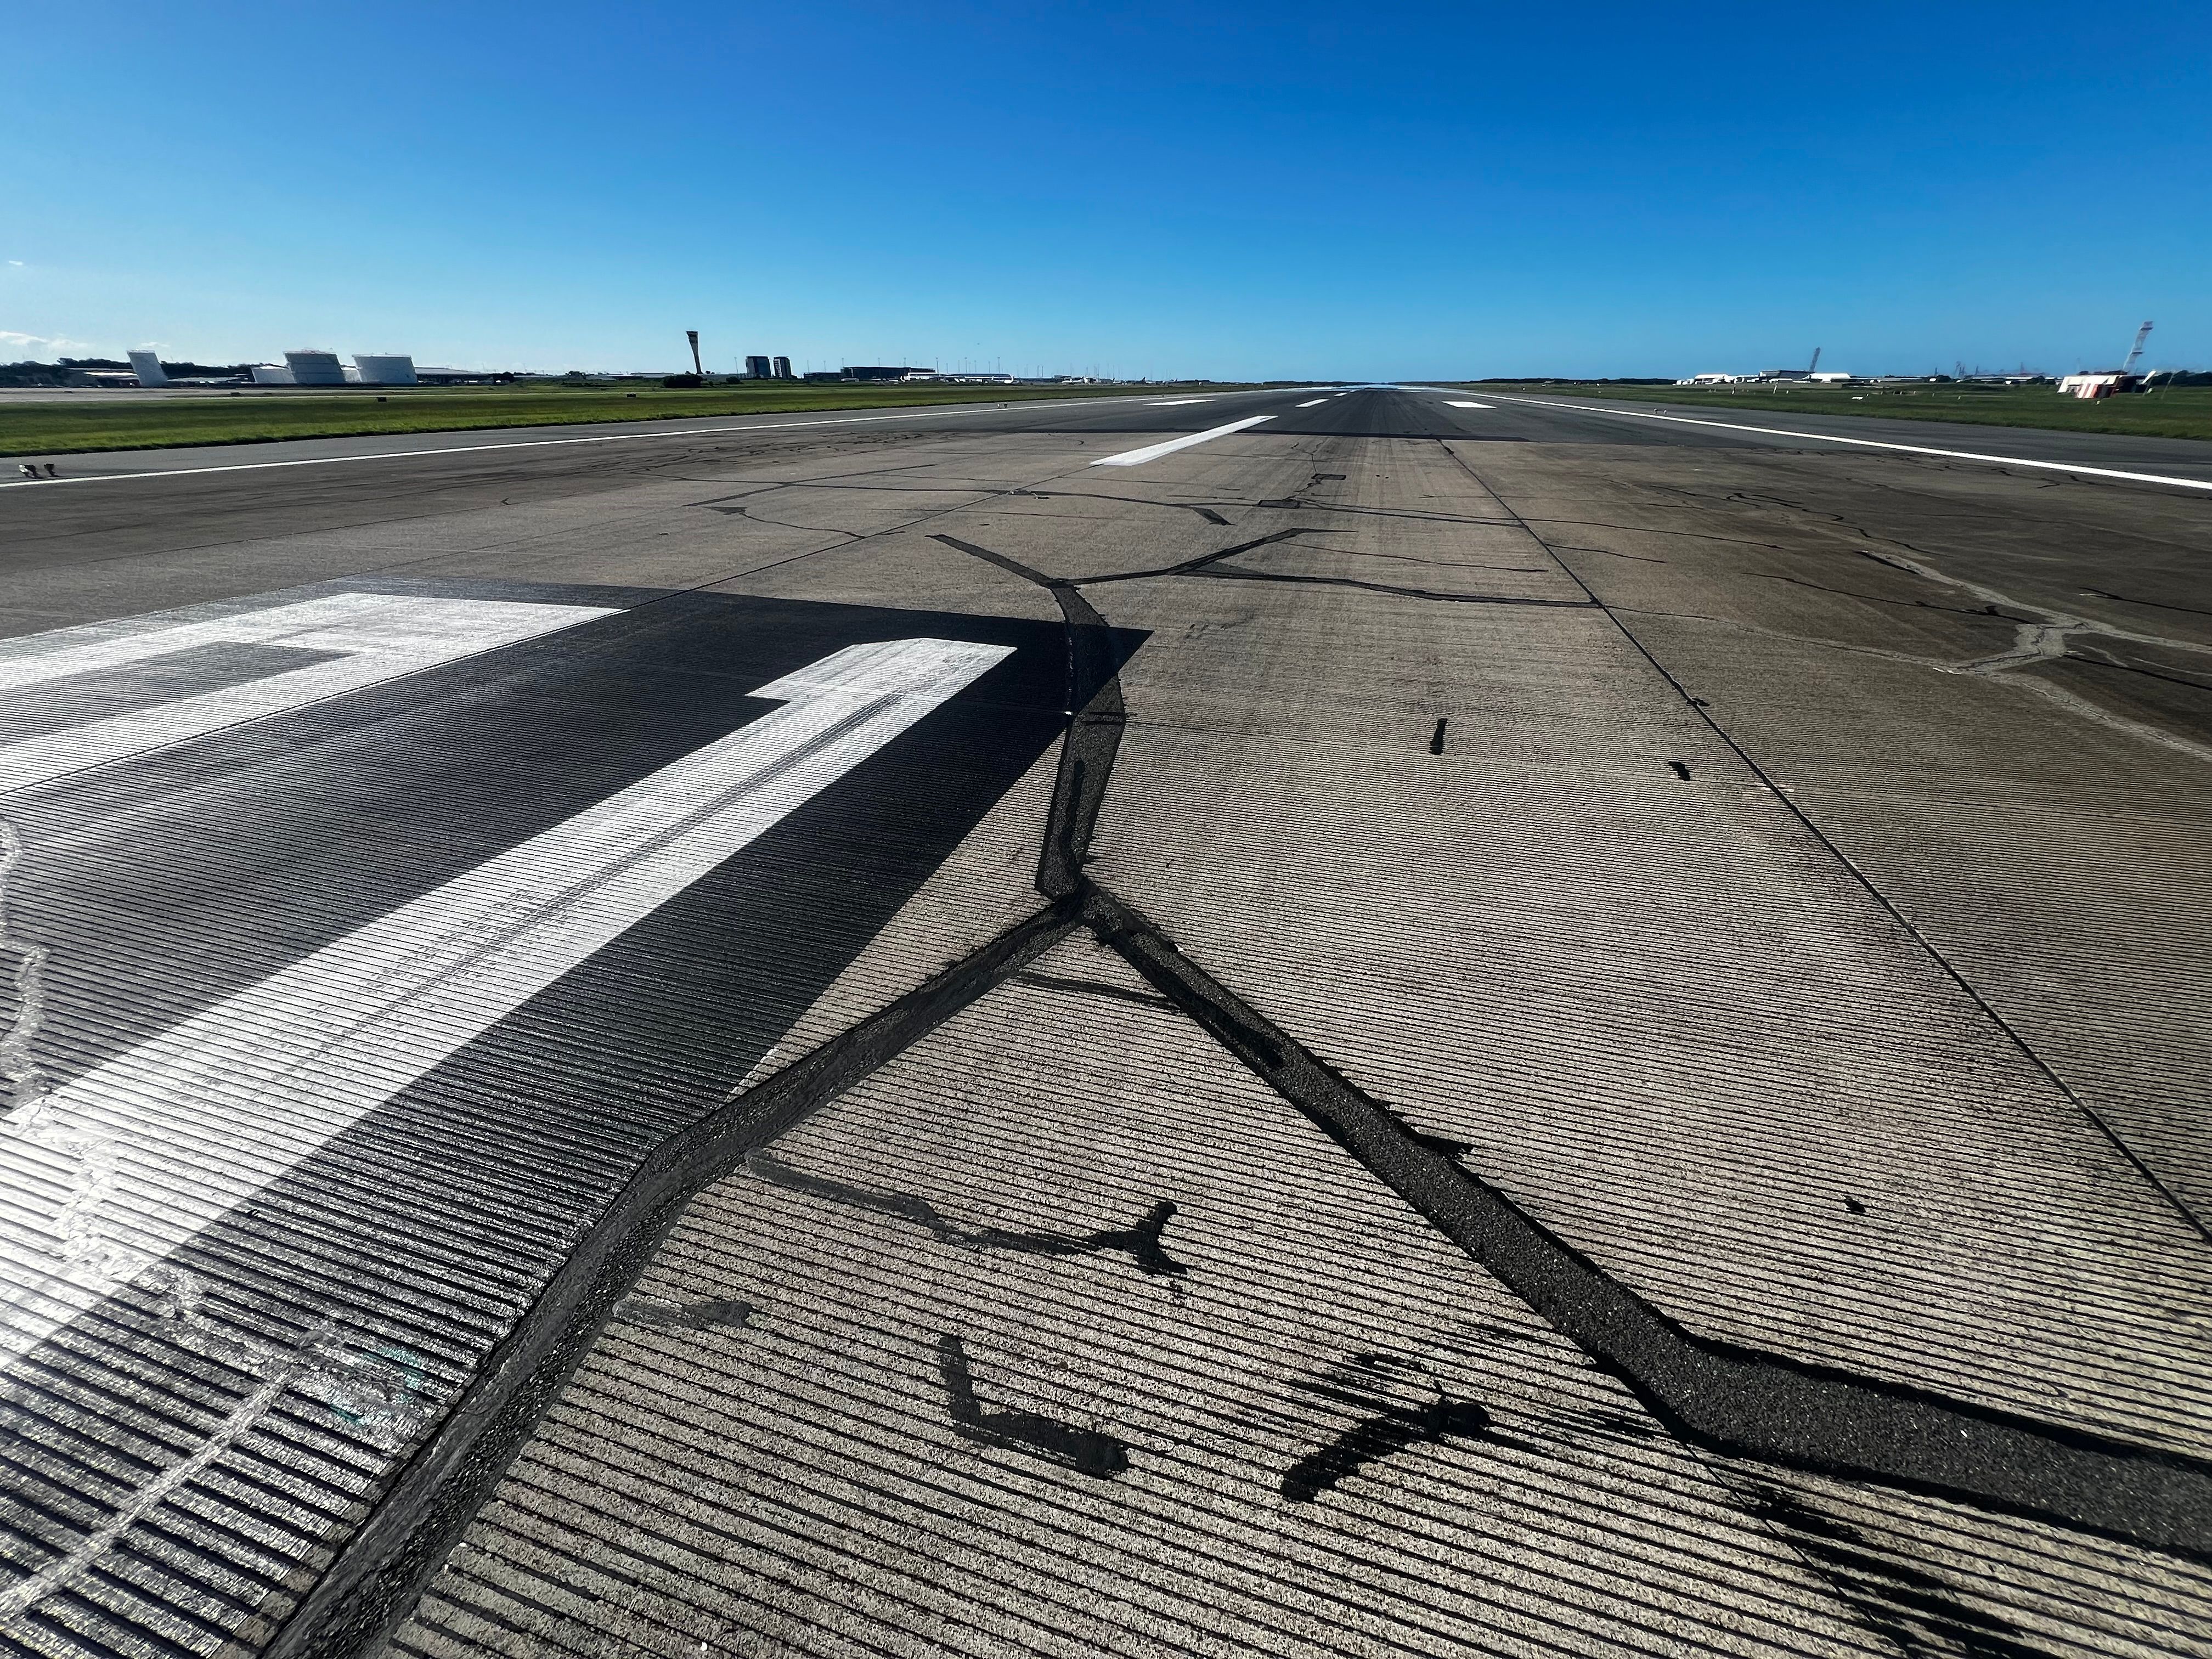 Brisbane Airport original runway existing threshold